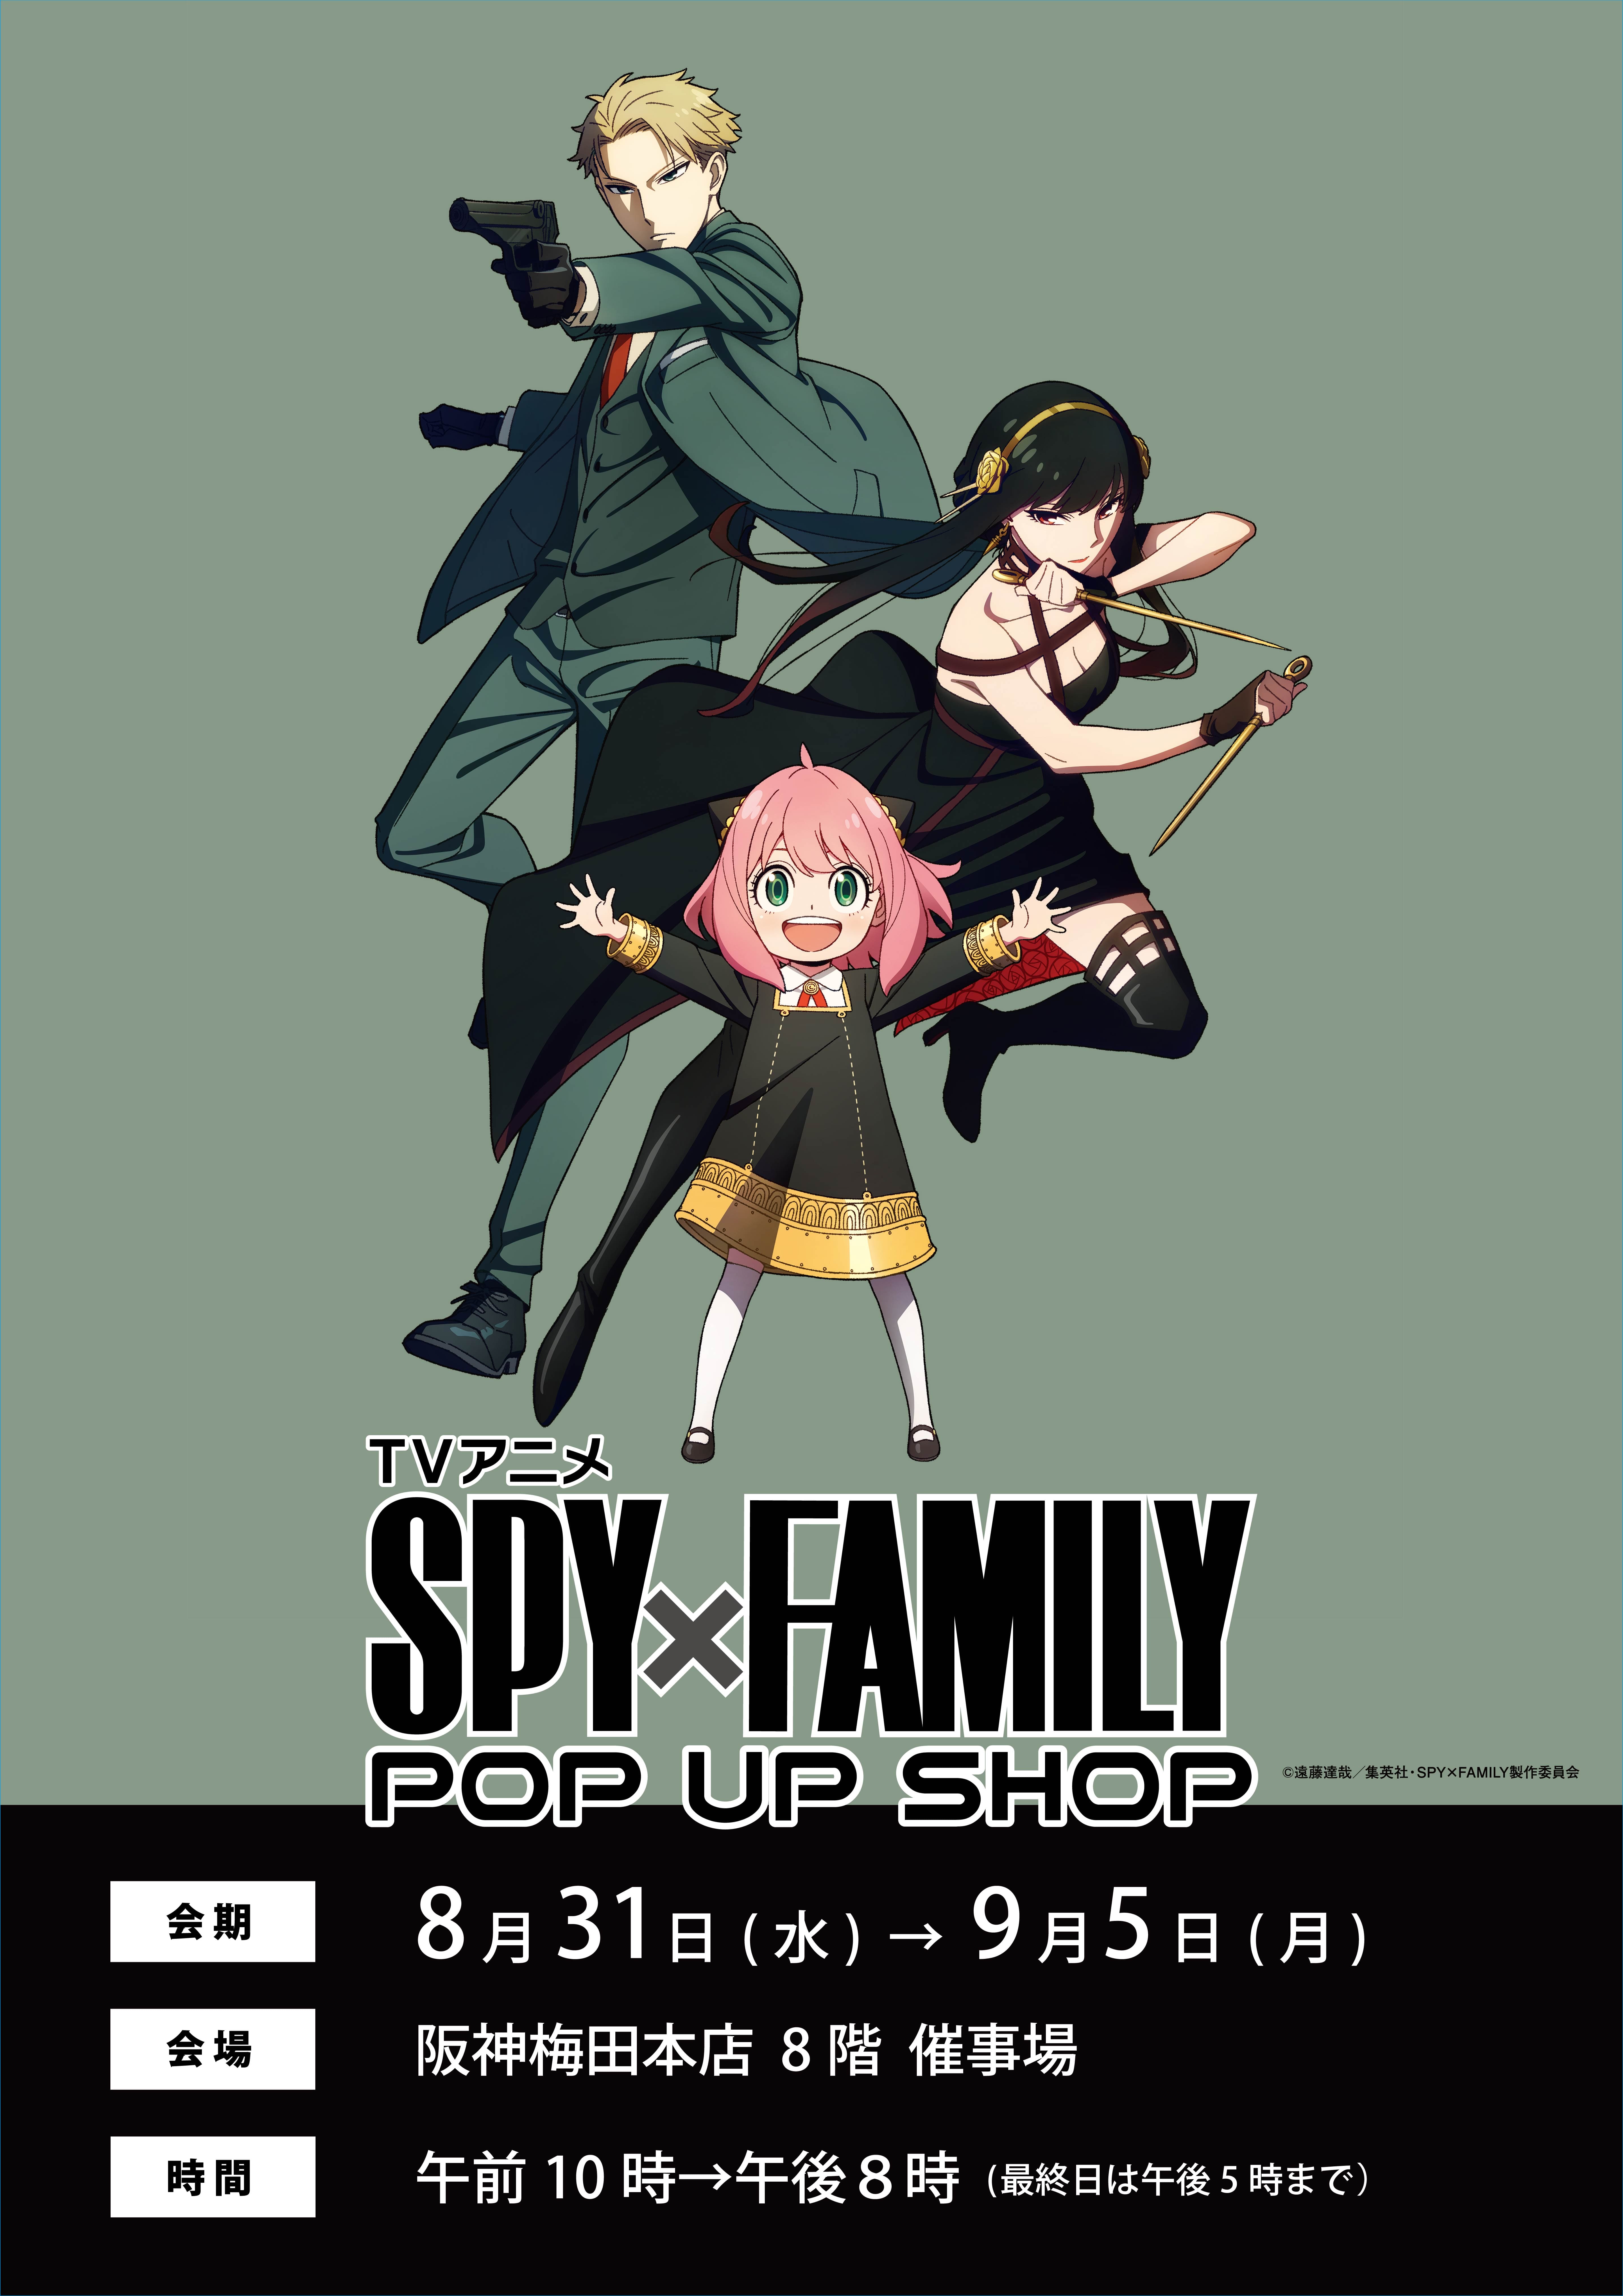 TVアニメ SPY×FAMILY POP UP SHOP